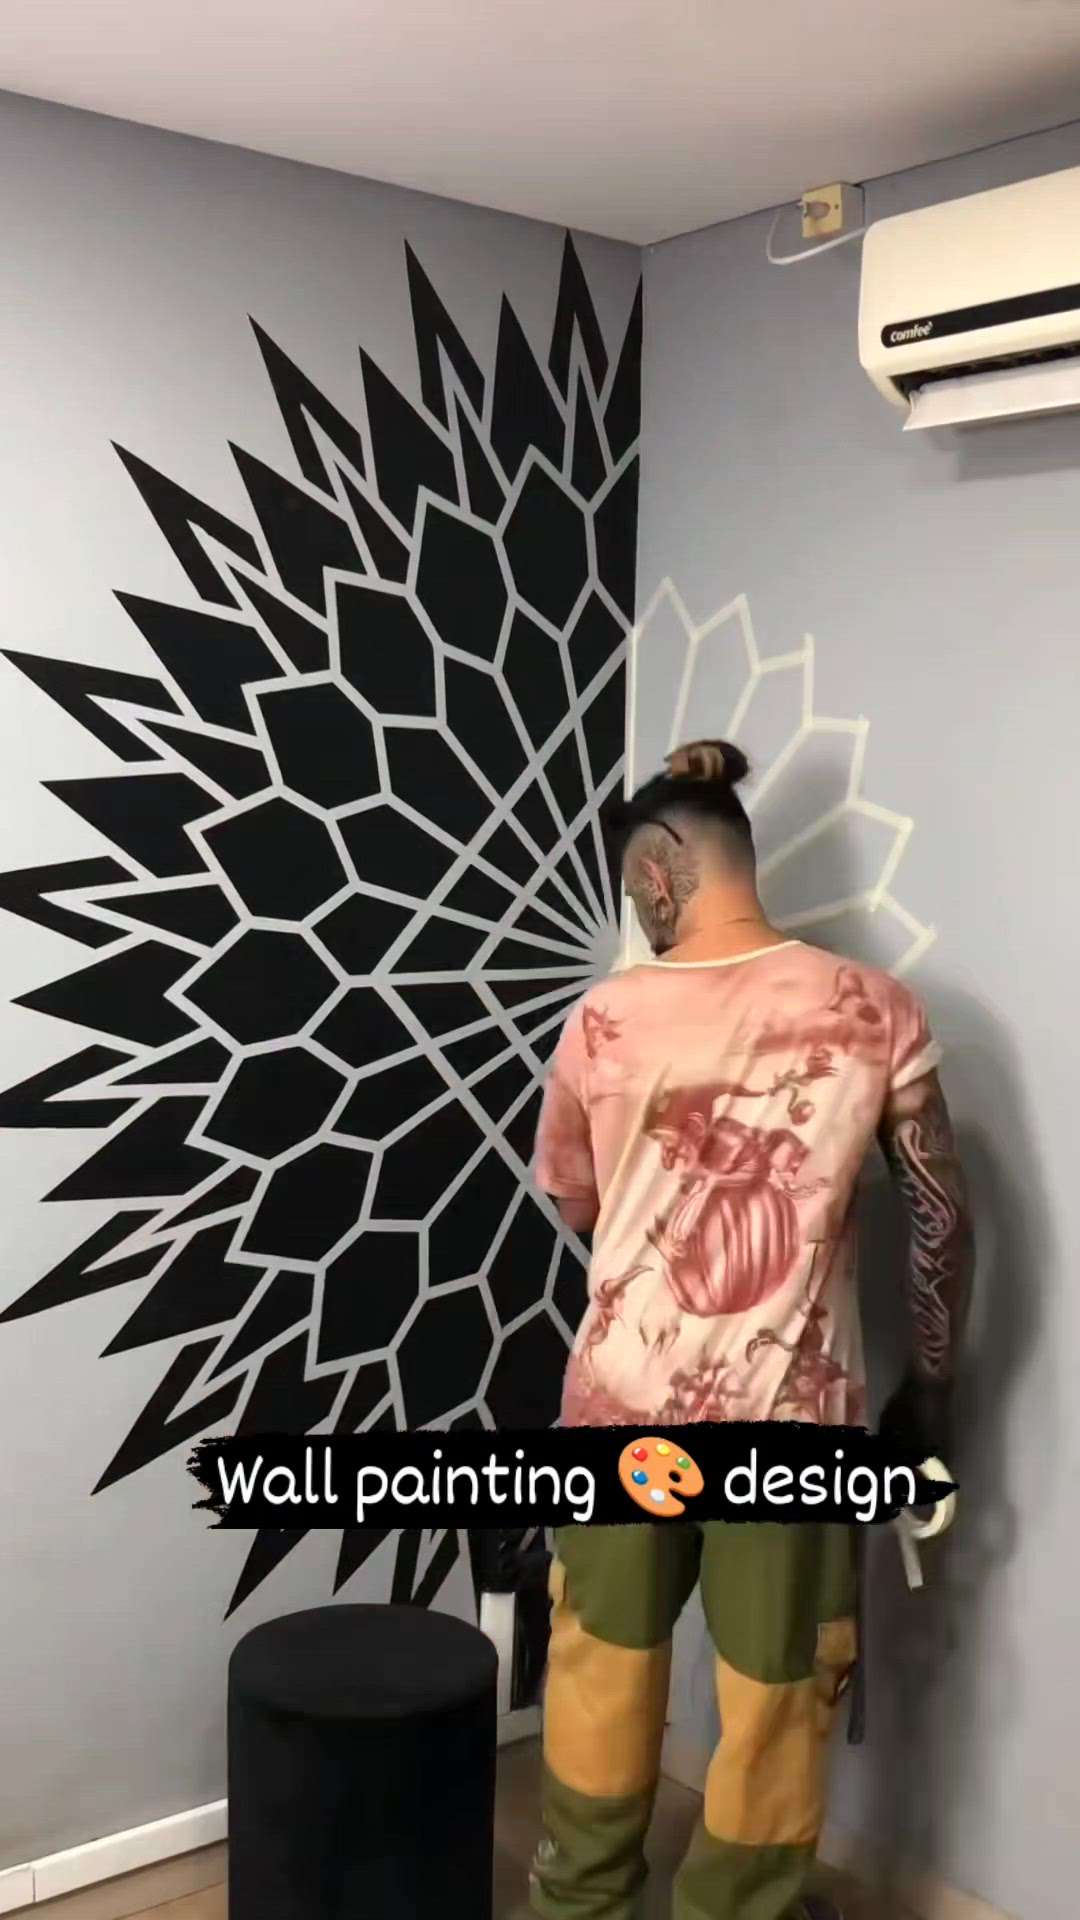 wall decorat design 🤩😍..
Bismillah fabrication welding work 🏡
contact number 👉📞 82285562500
.
.
.
.
.
.
 #koloviral  #kolodesign  #WallDecors  #WallDesigns  #walldesign  #trendingdesign  #reelskoloap